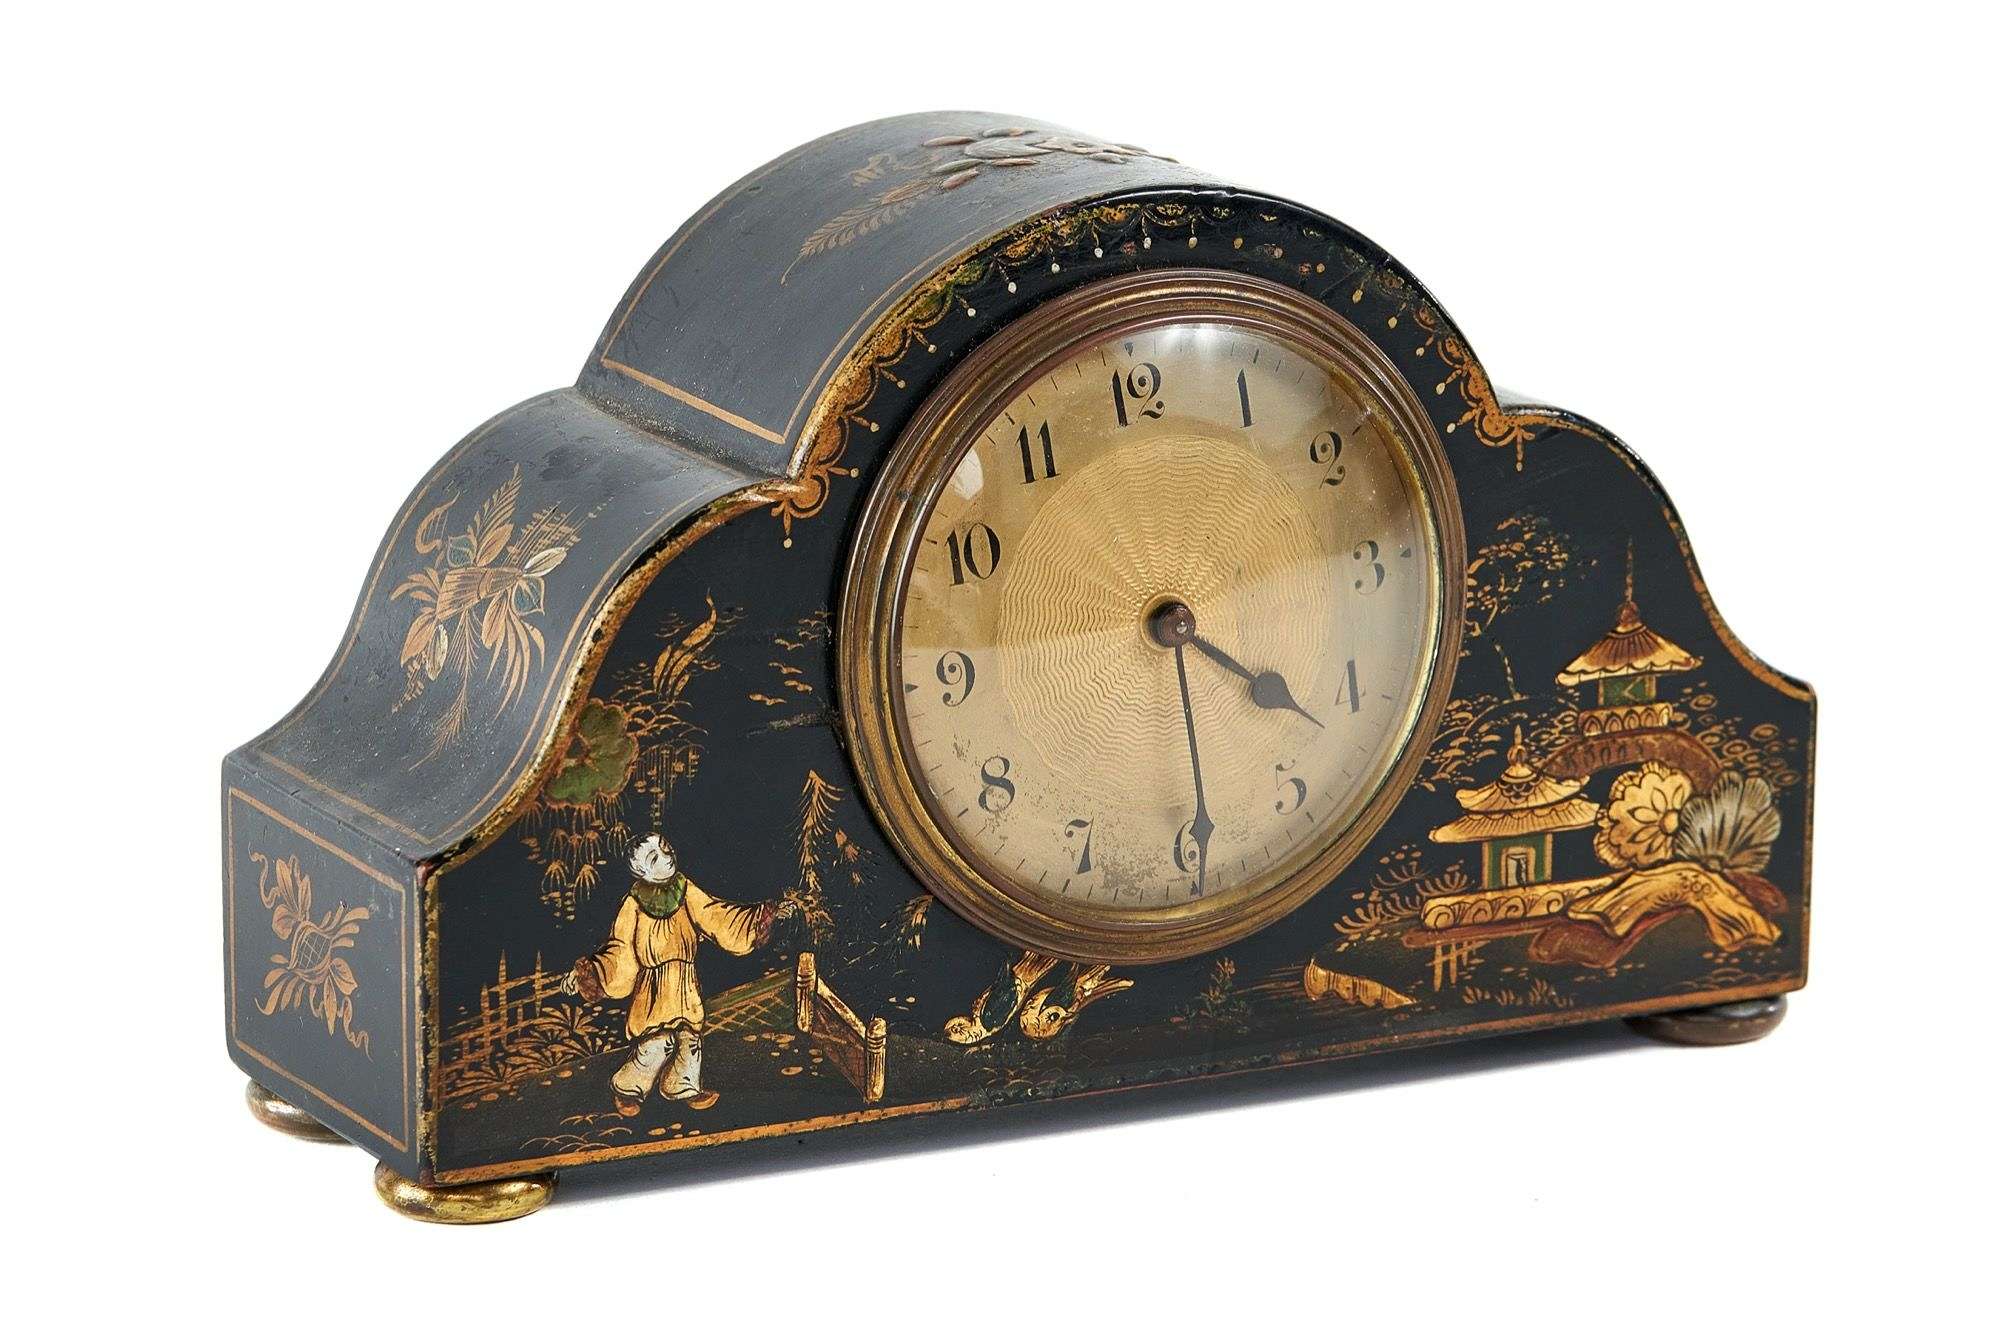 Chinoiserie decorated mantel clock circa 1920s,